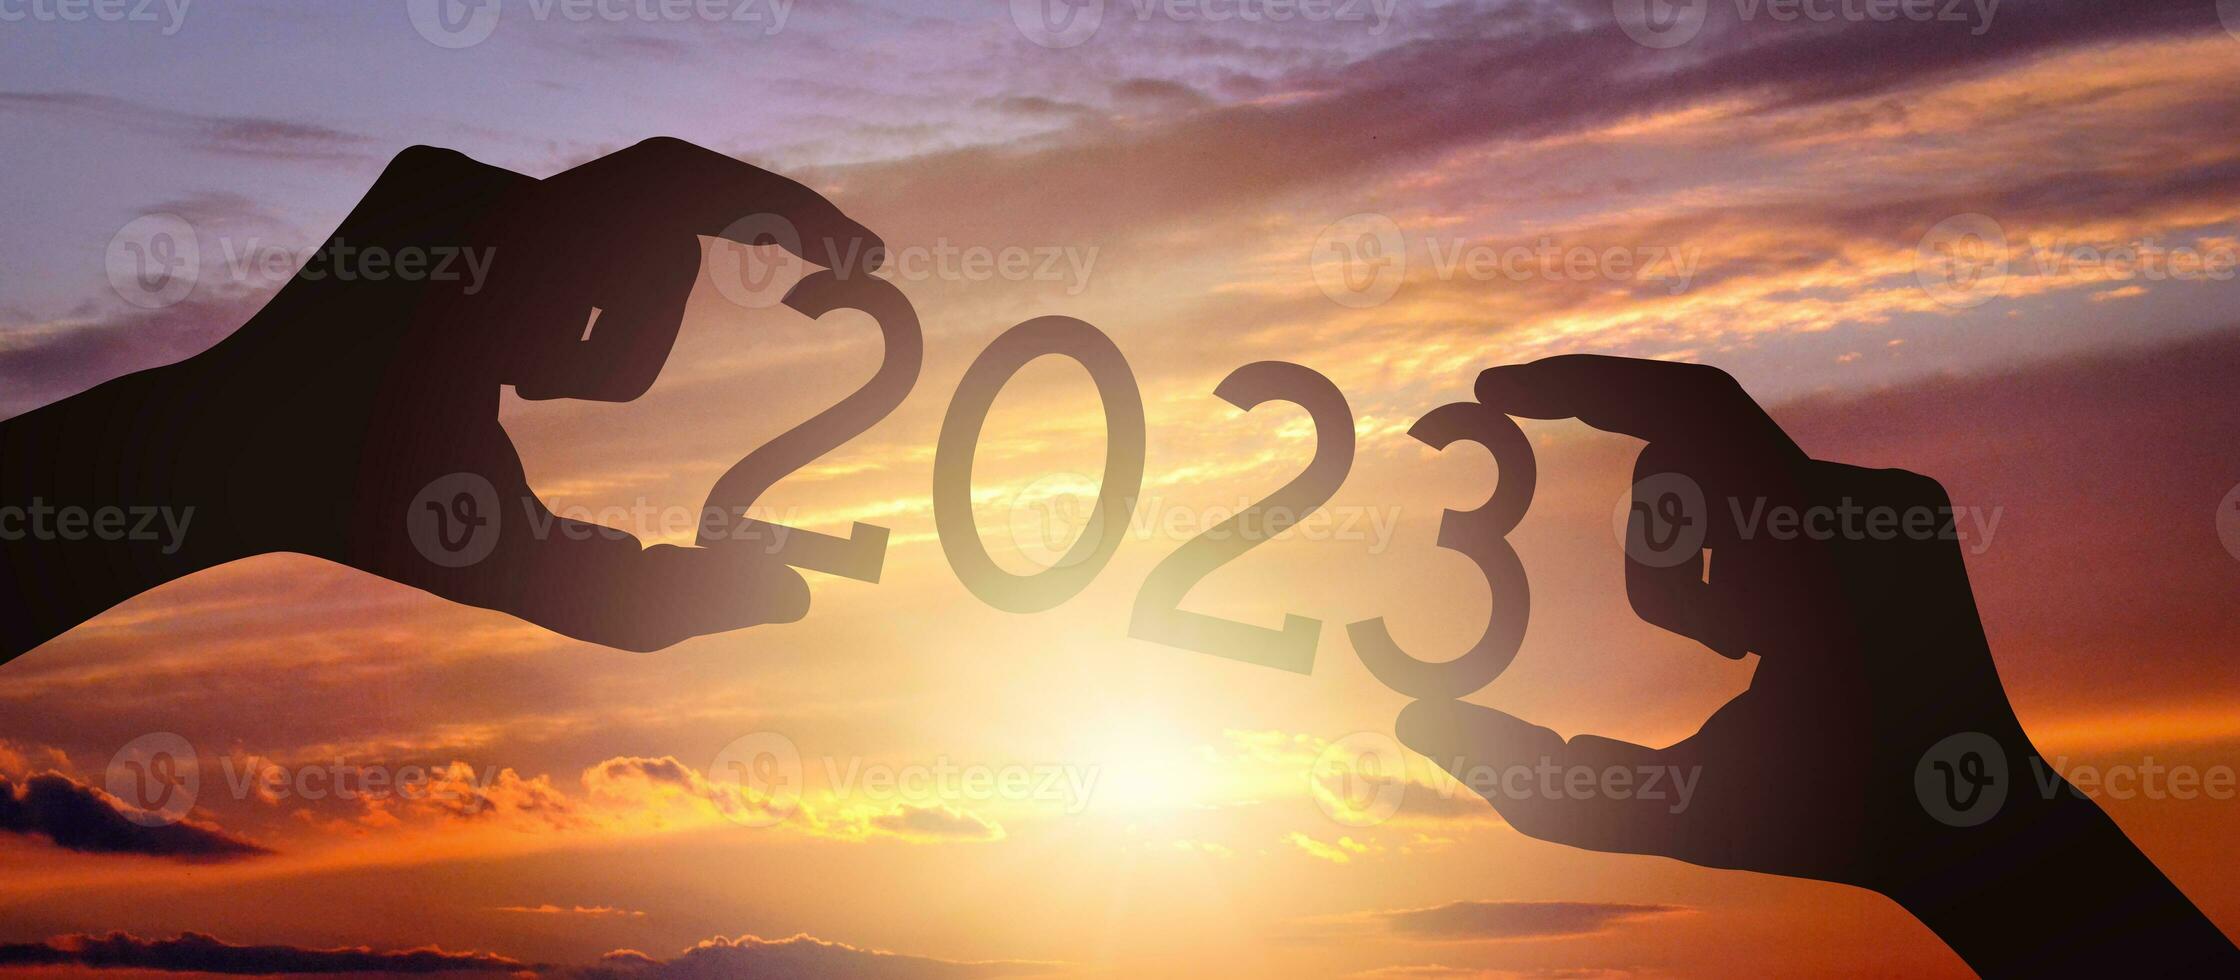 2023 - humano mãos segurando Preto silhueta ano número foto